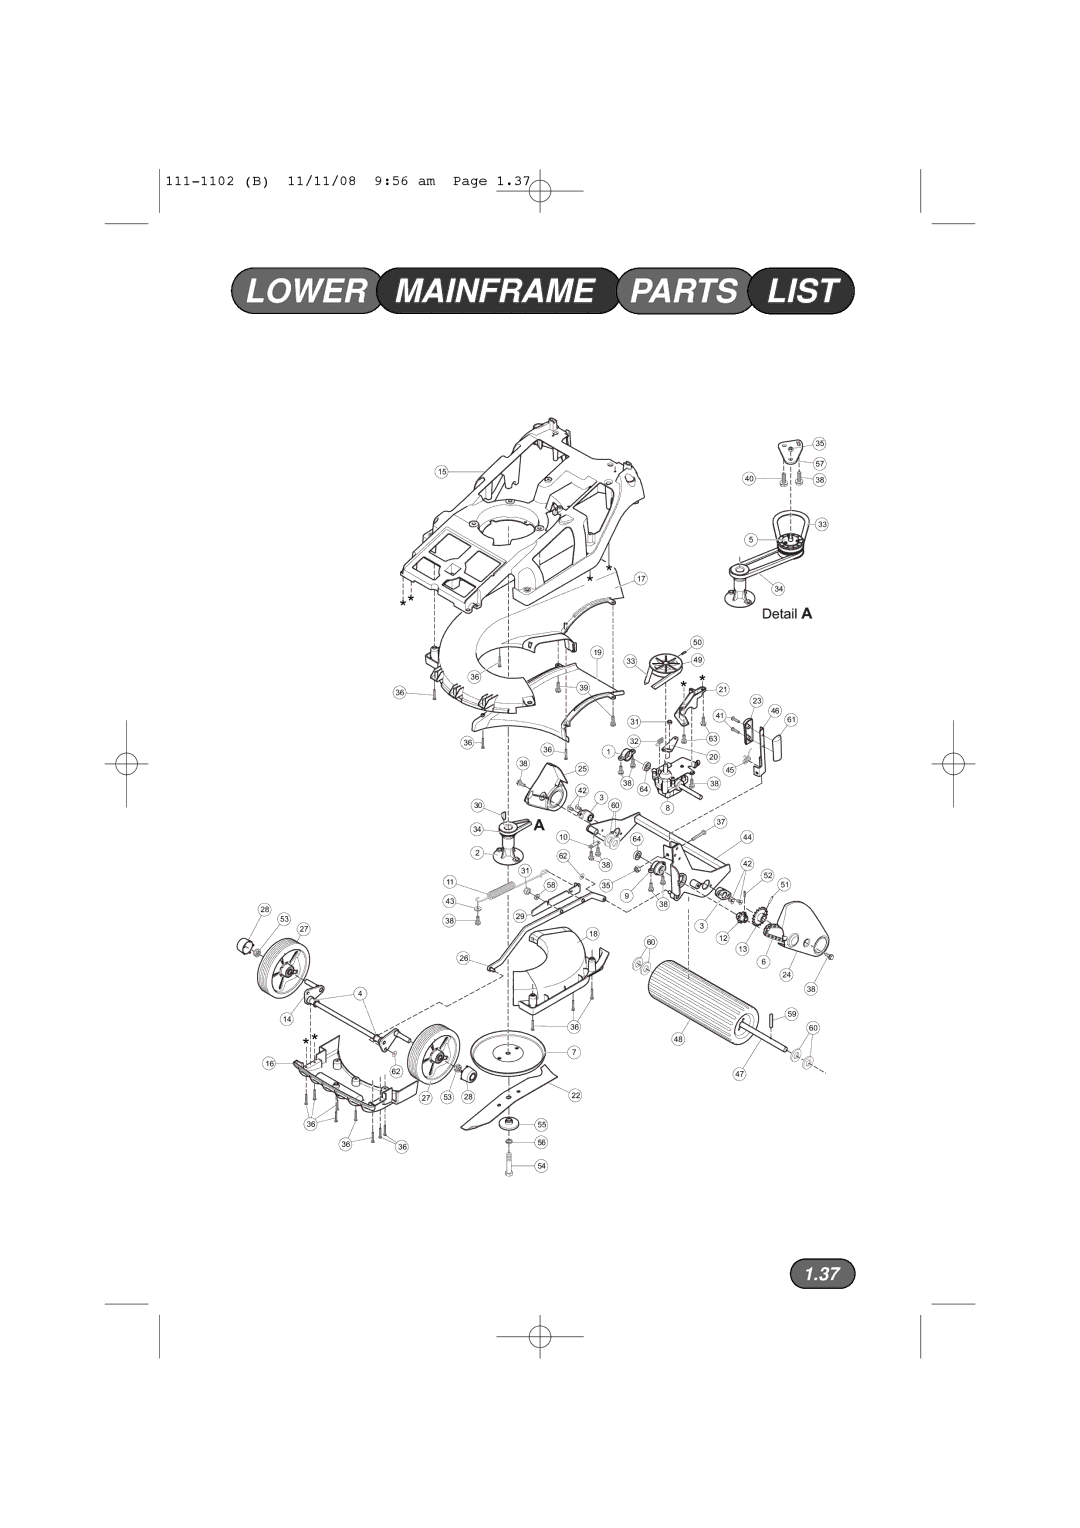 Spirit 619E, 617E manual Lower Mainframe Parts List 